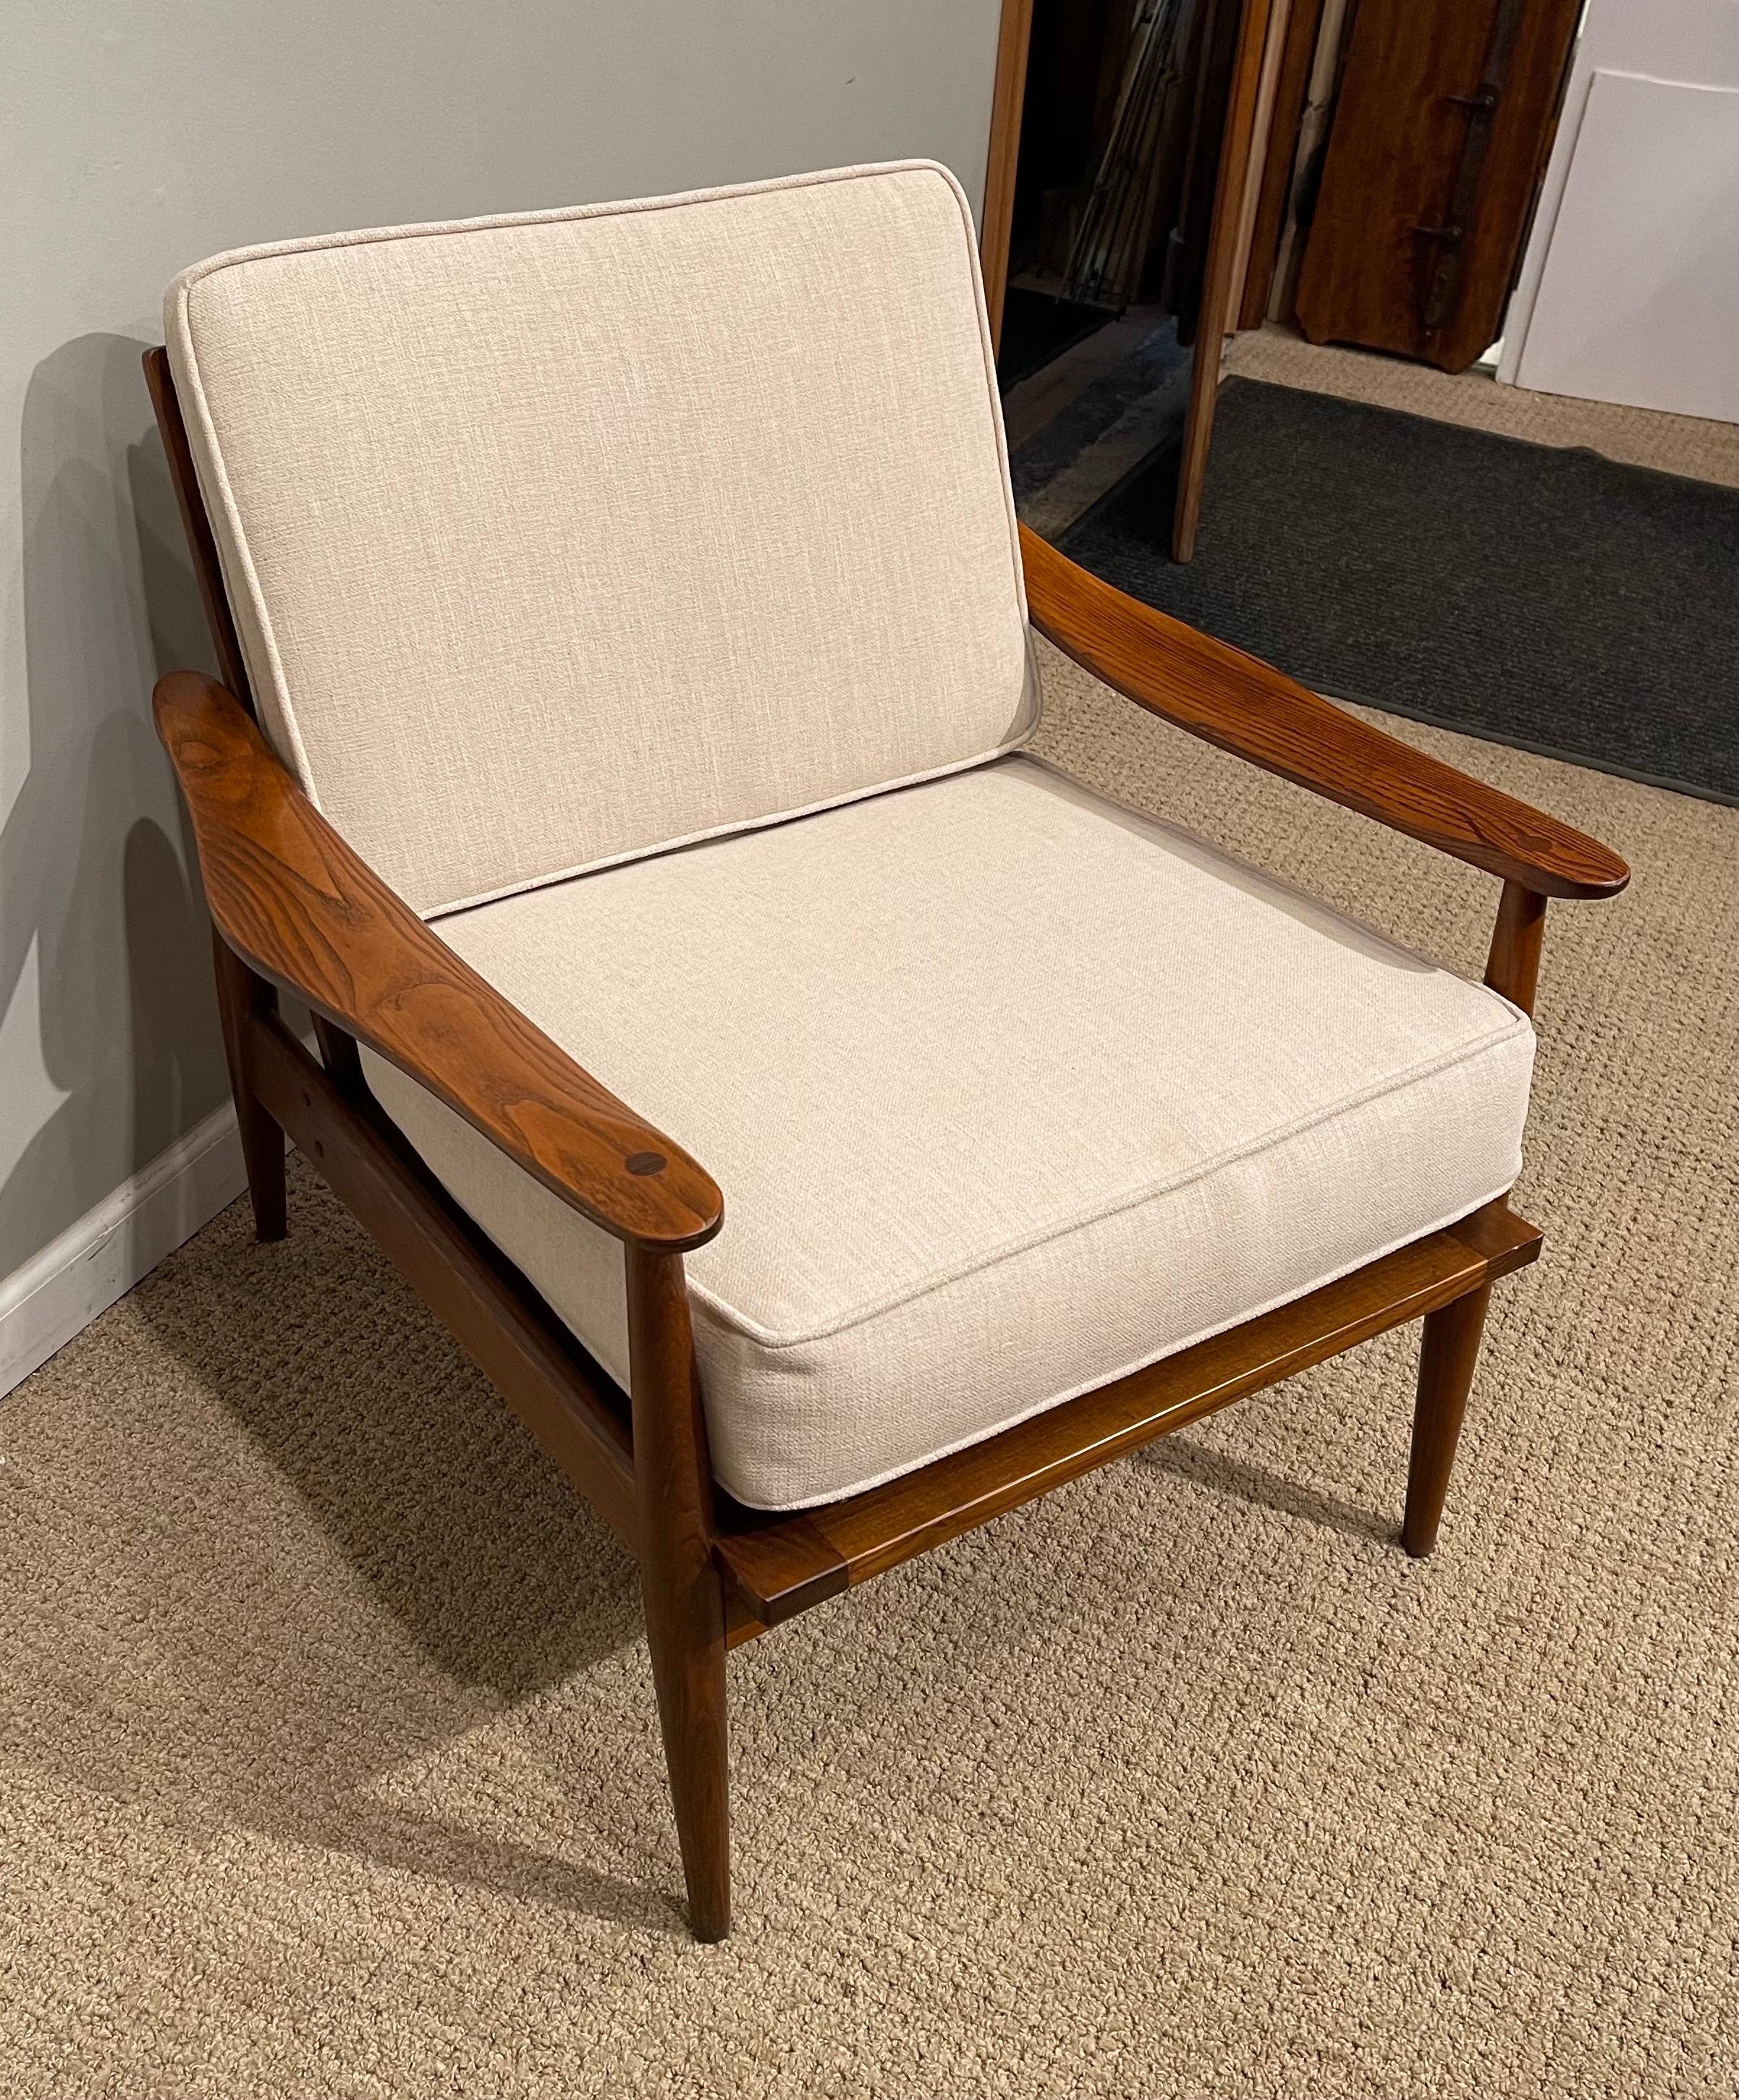 A Mid-Century Modern, oak armchair with new cushions.